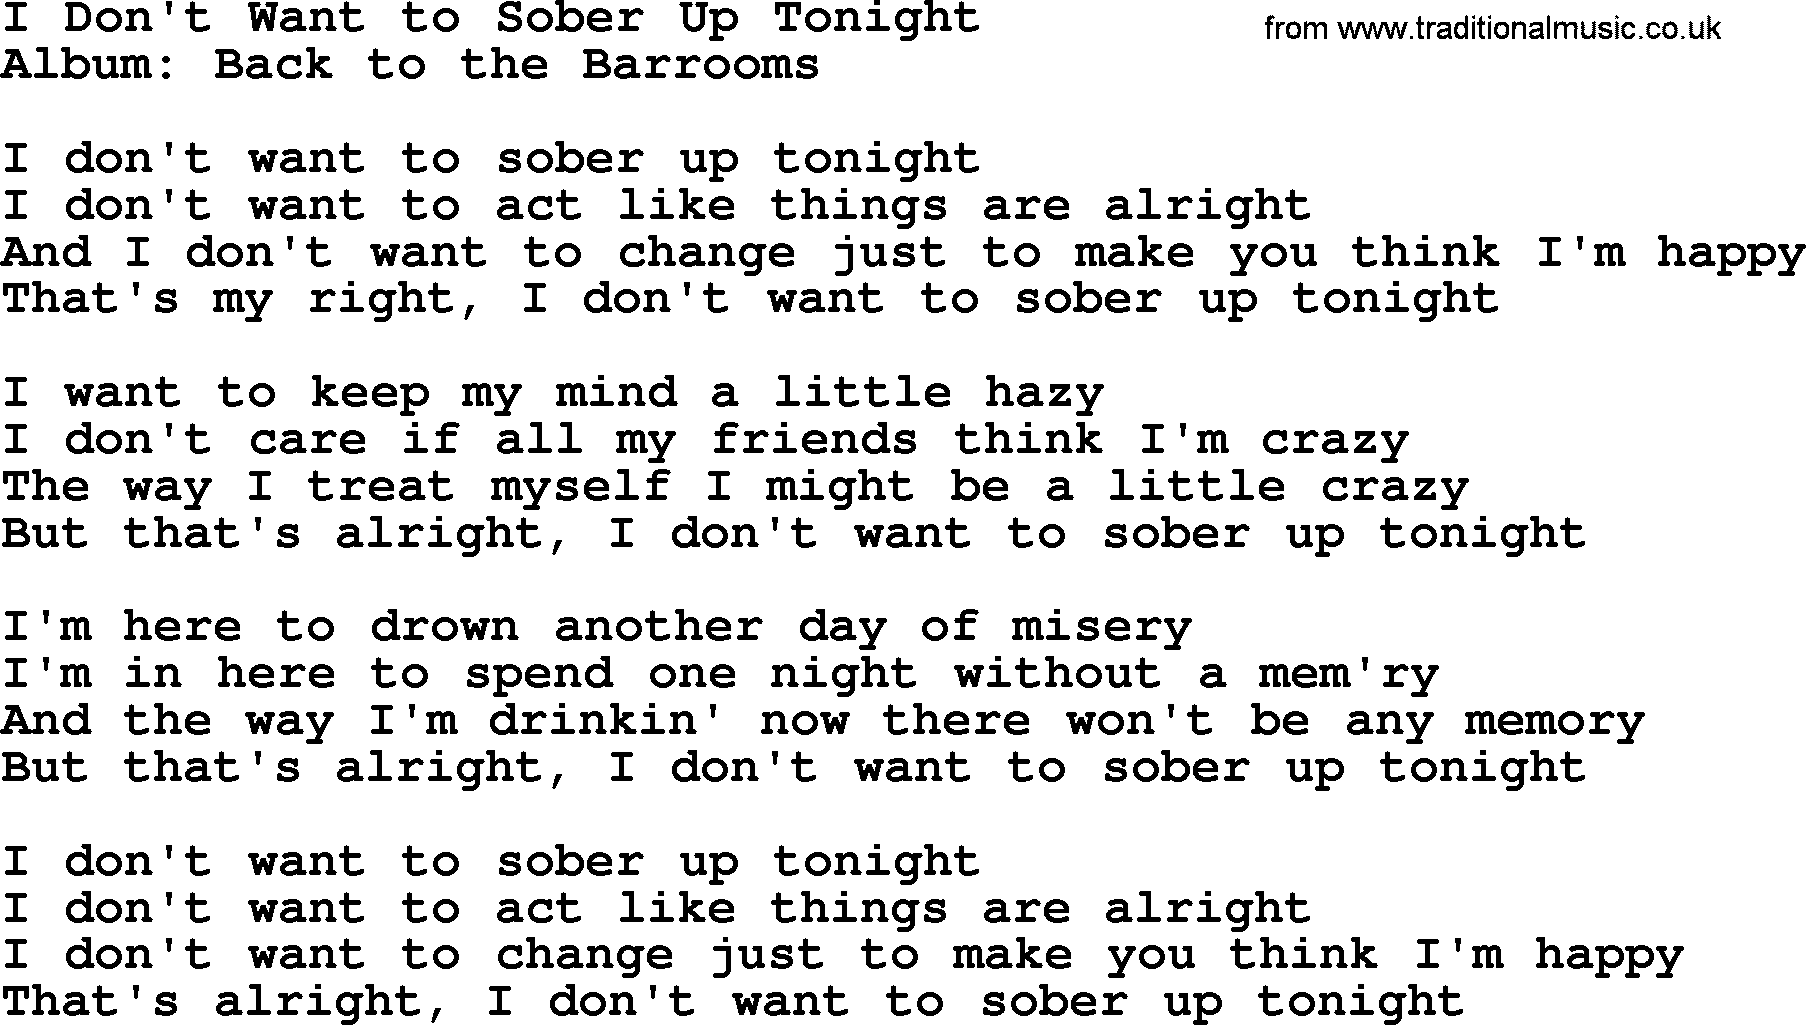 Merle Haggard song: I Don't Want To Sober Up Tonight, lyrics.